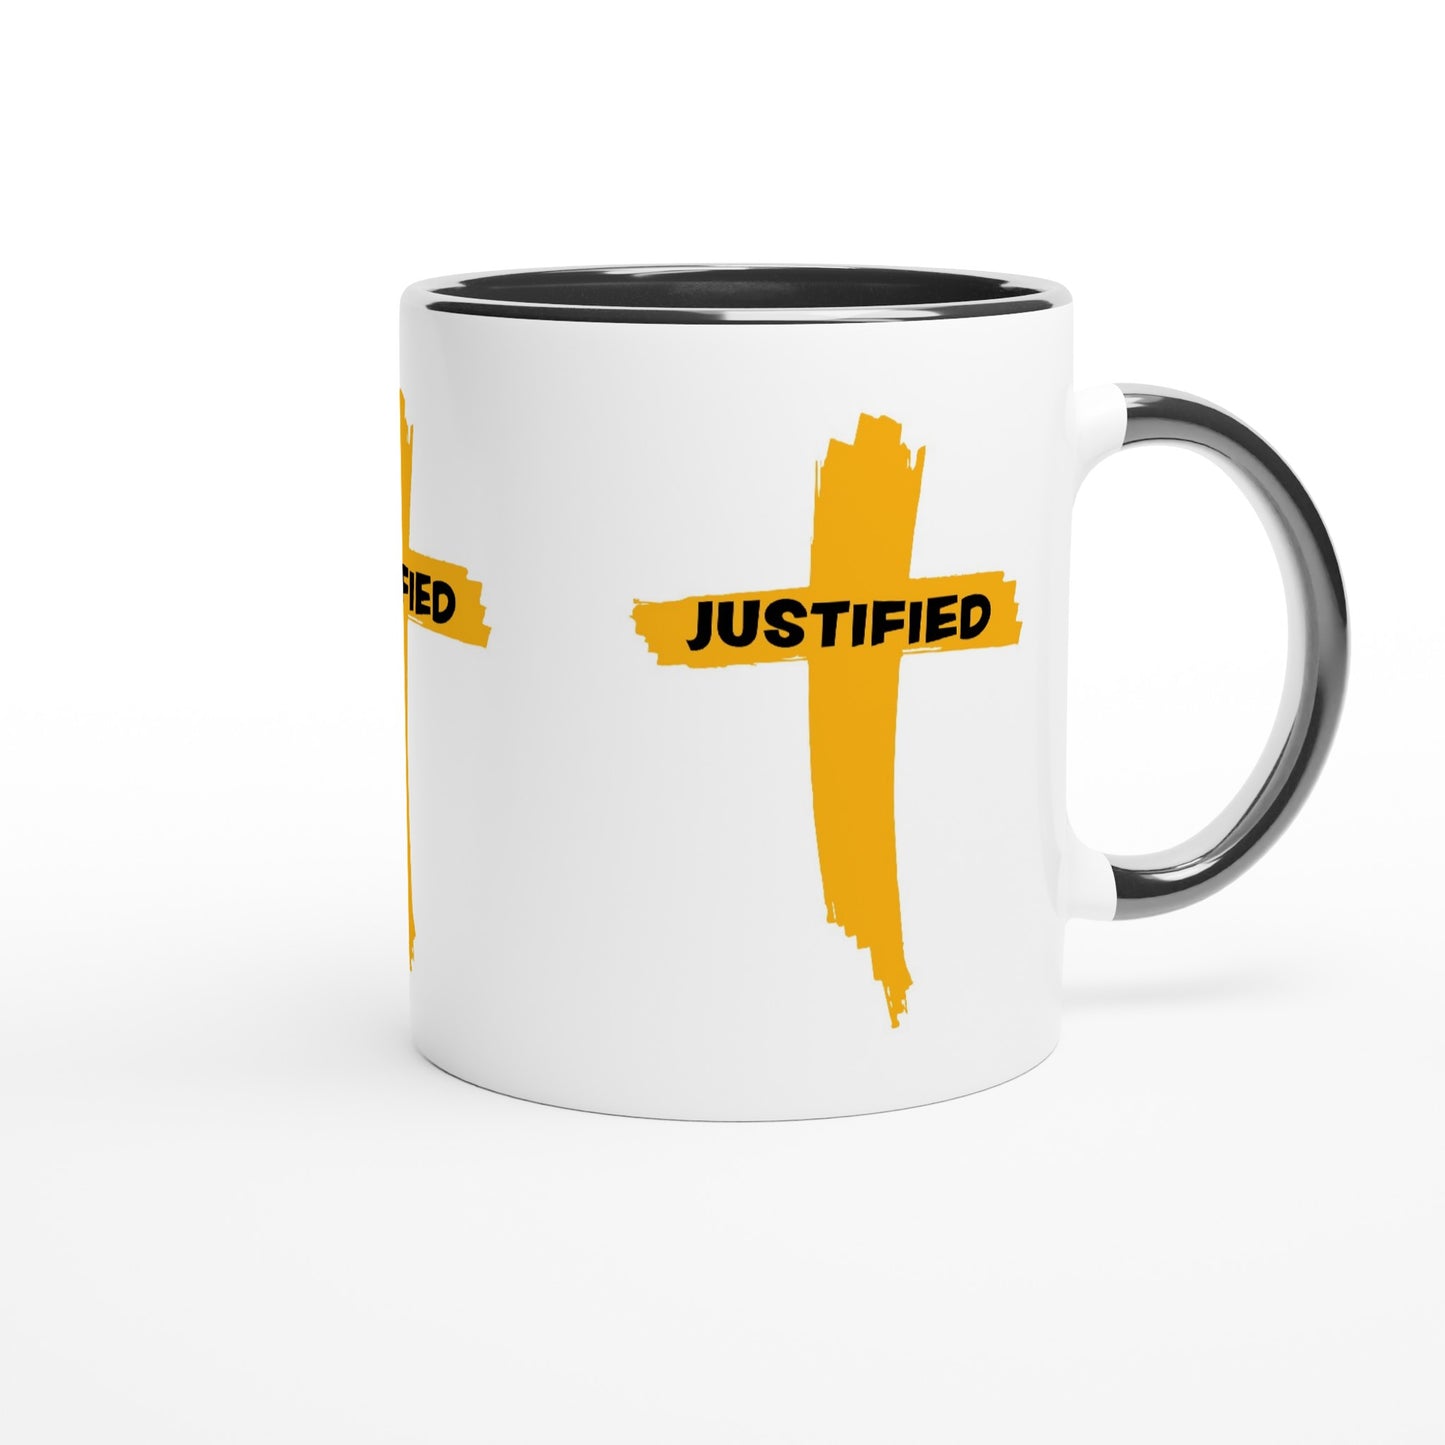 JUSTIFIED Mug from Cross Series